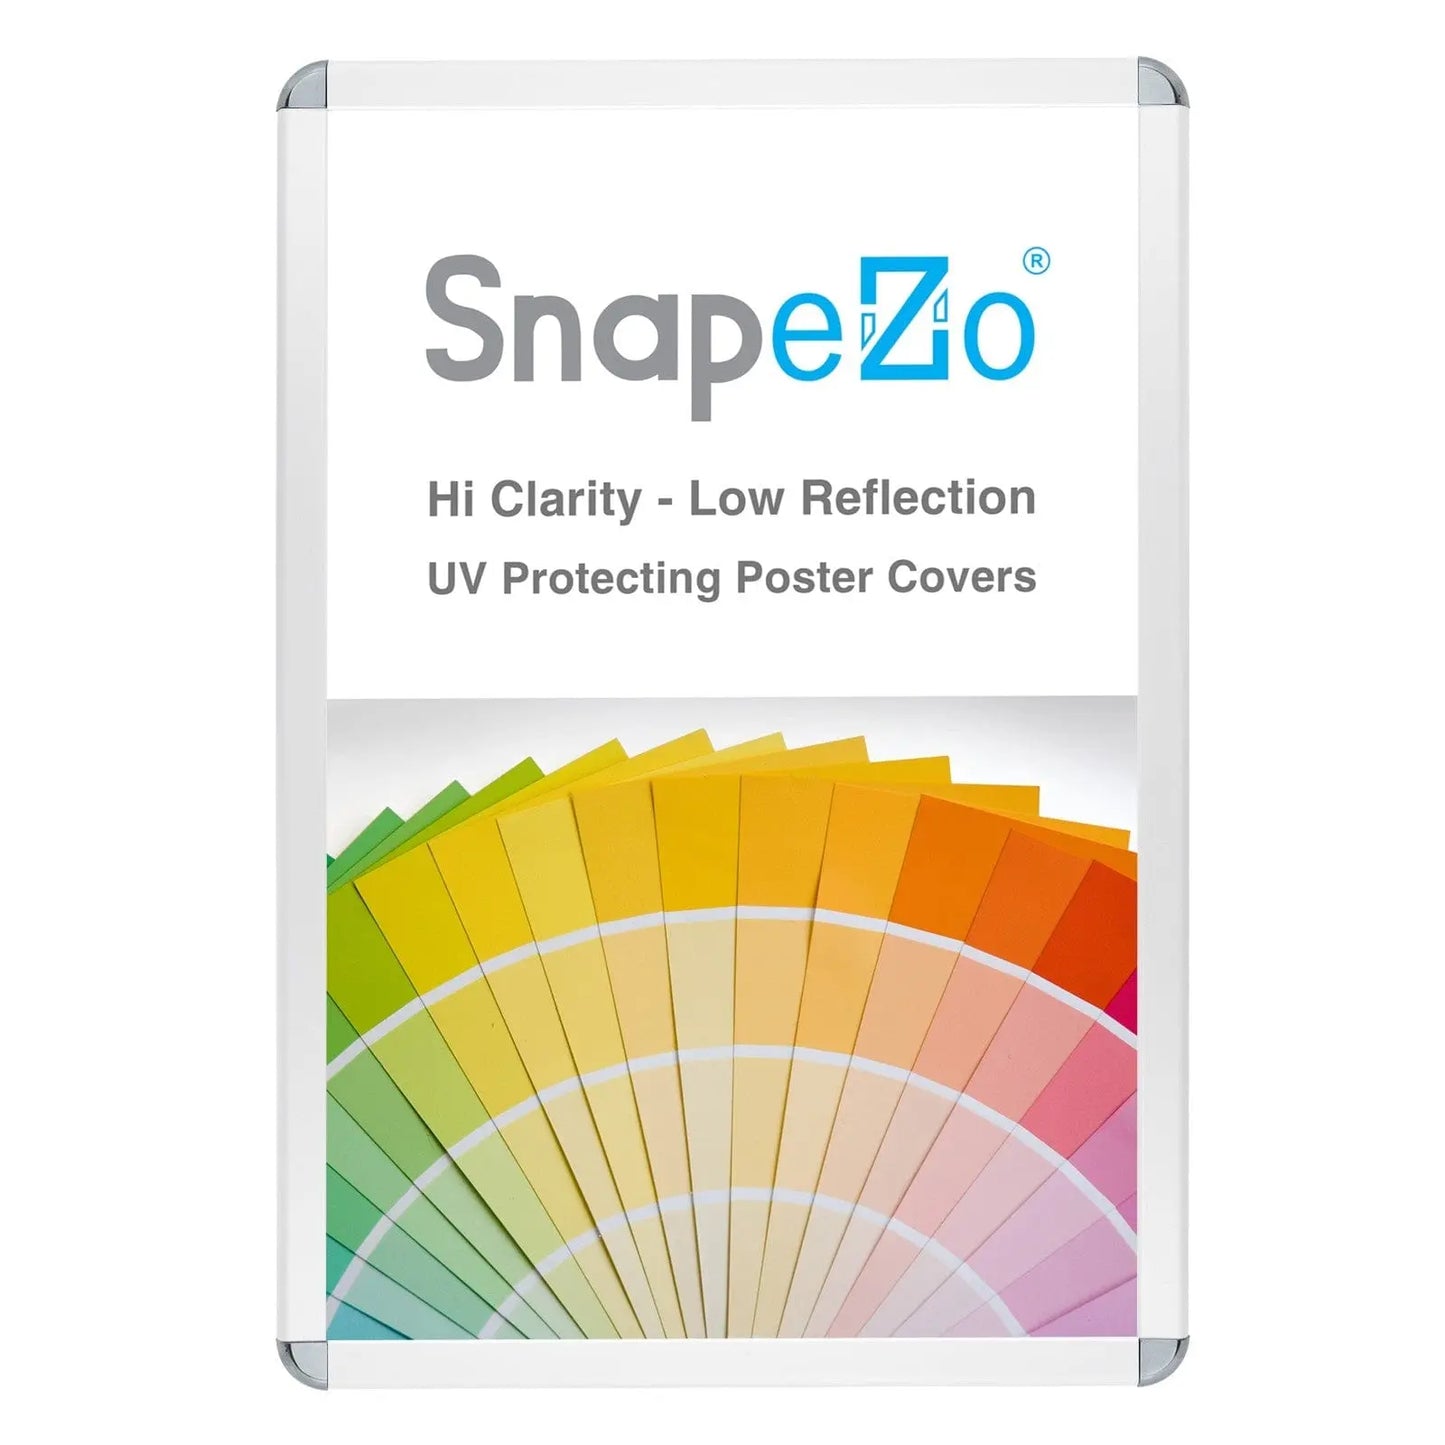 27x41 White SnapeZo® Round-Cornered - 1.25" Profile - Snap Frames Direct